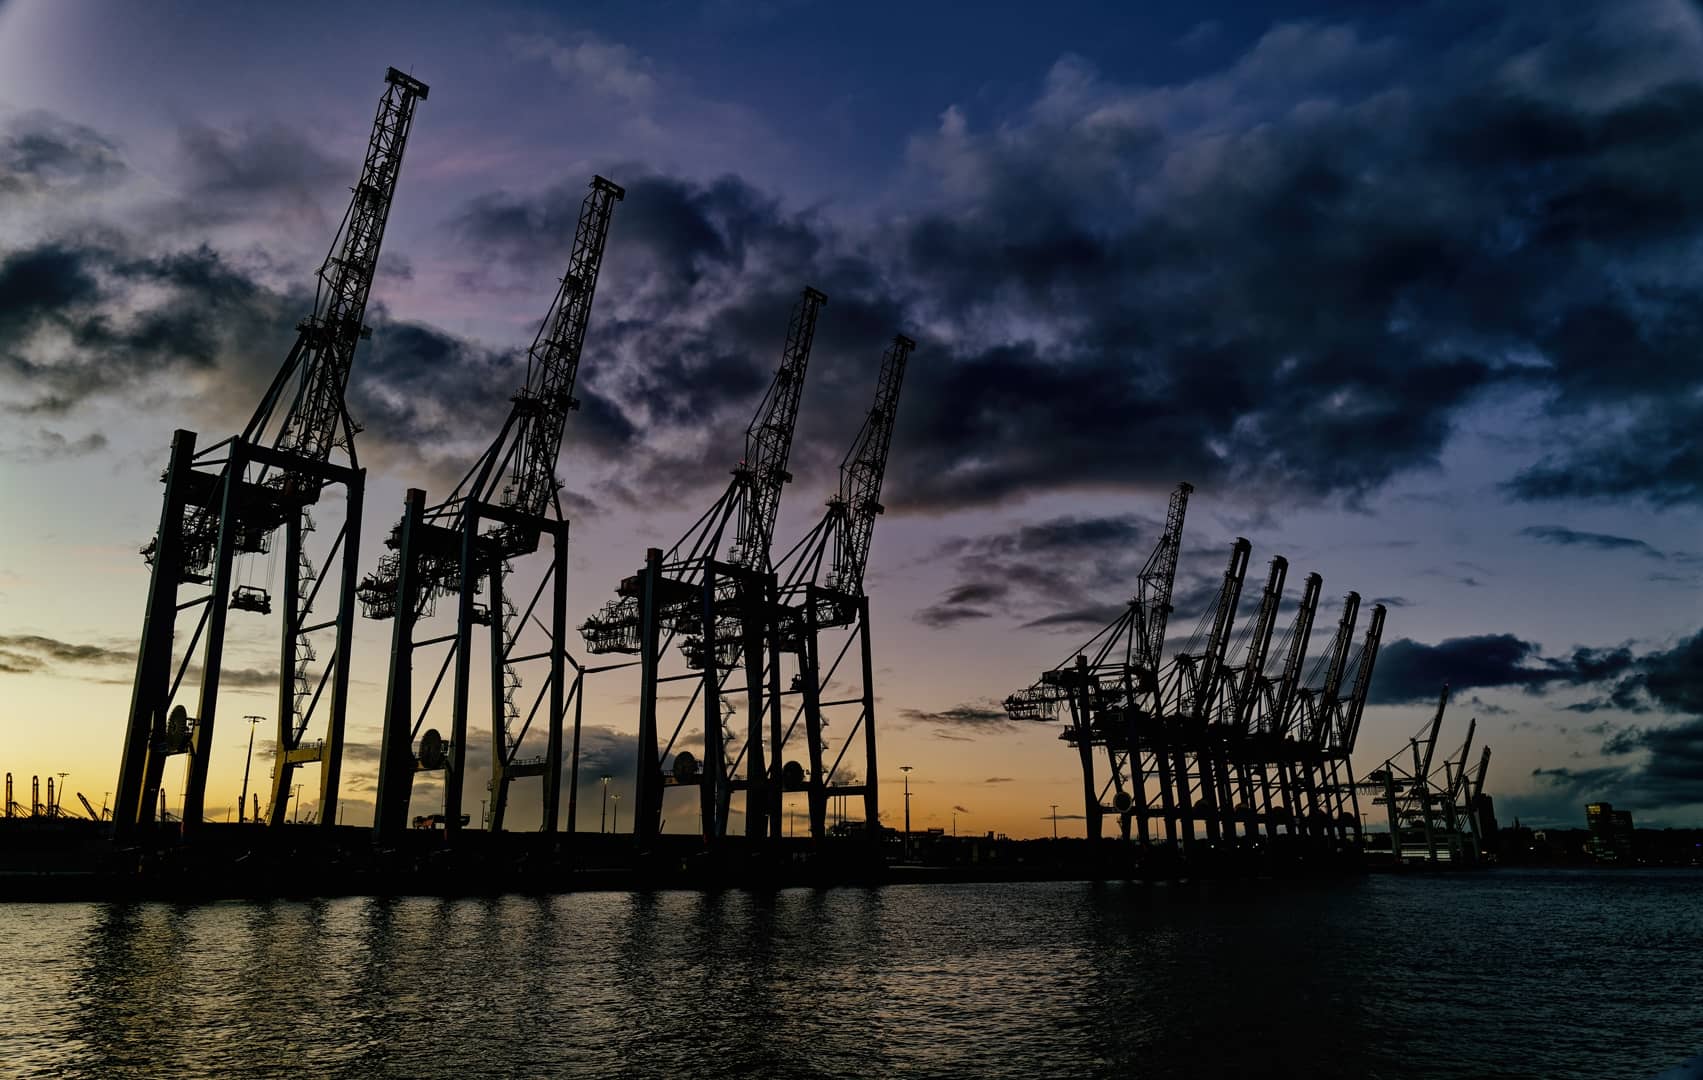 Hamburger Hafen fotografiert von Danny Koerber